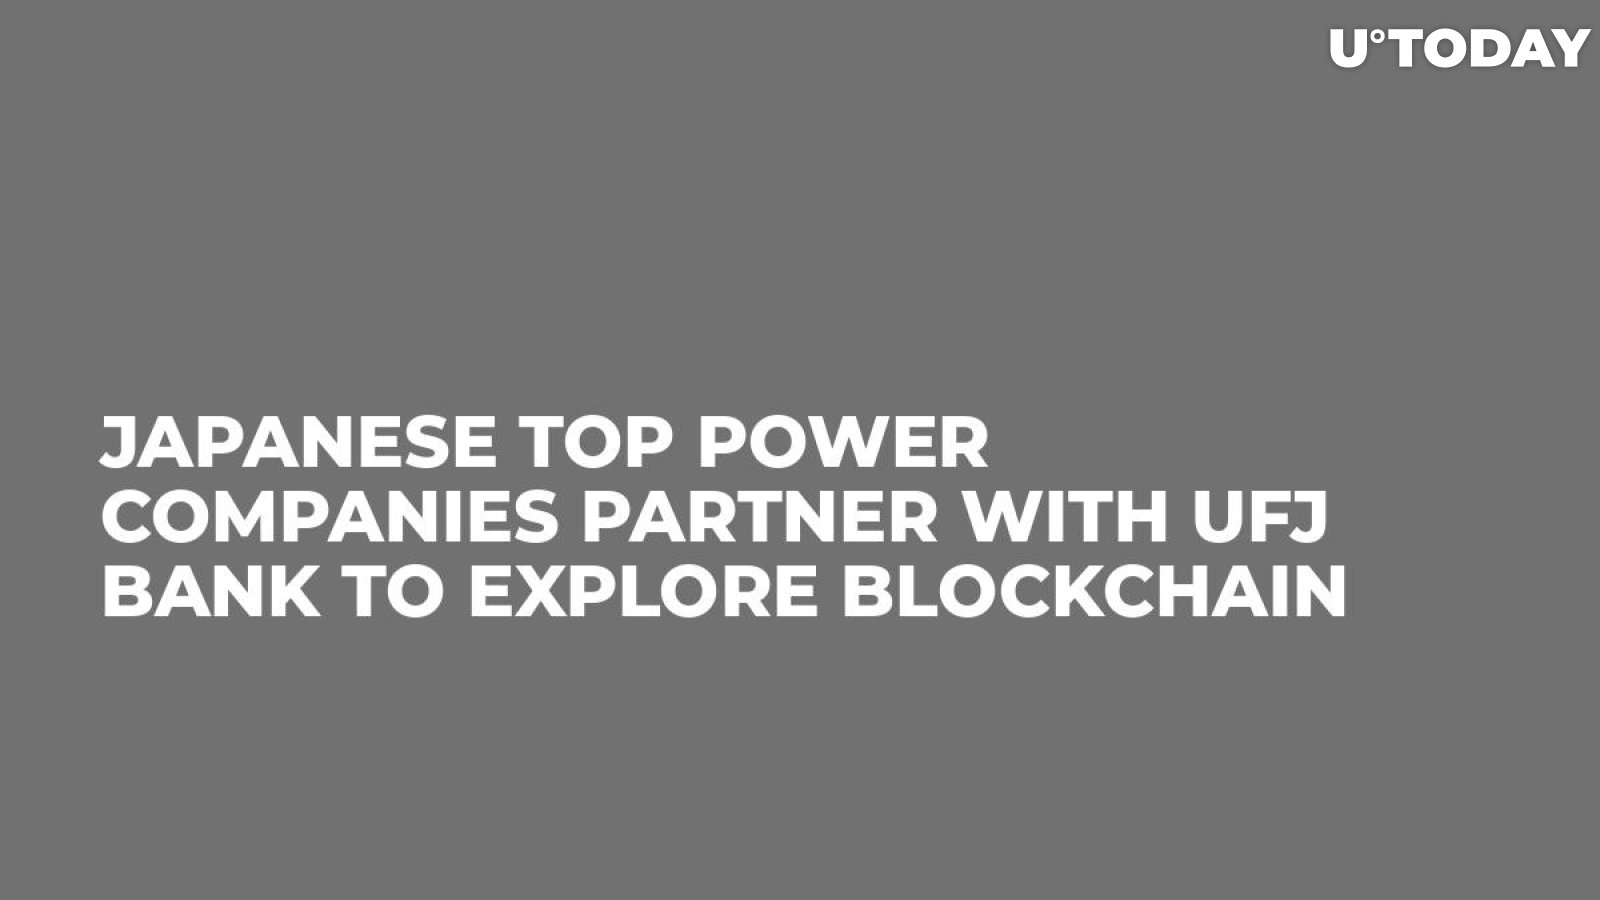 Japanese Top Power Companies Partner with UFJ Bank to Explore Blockchain